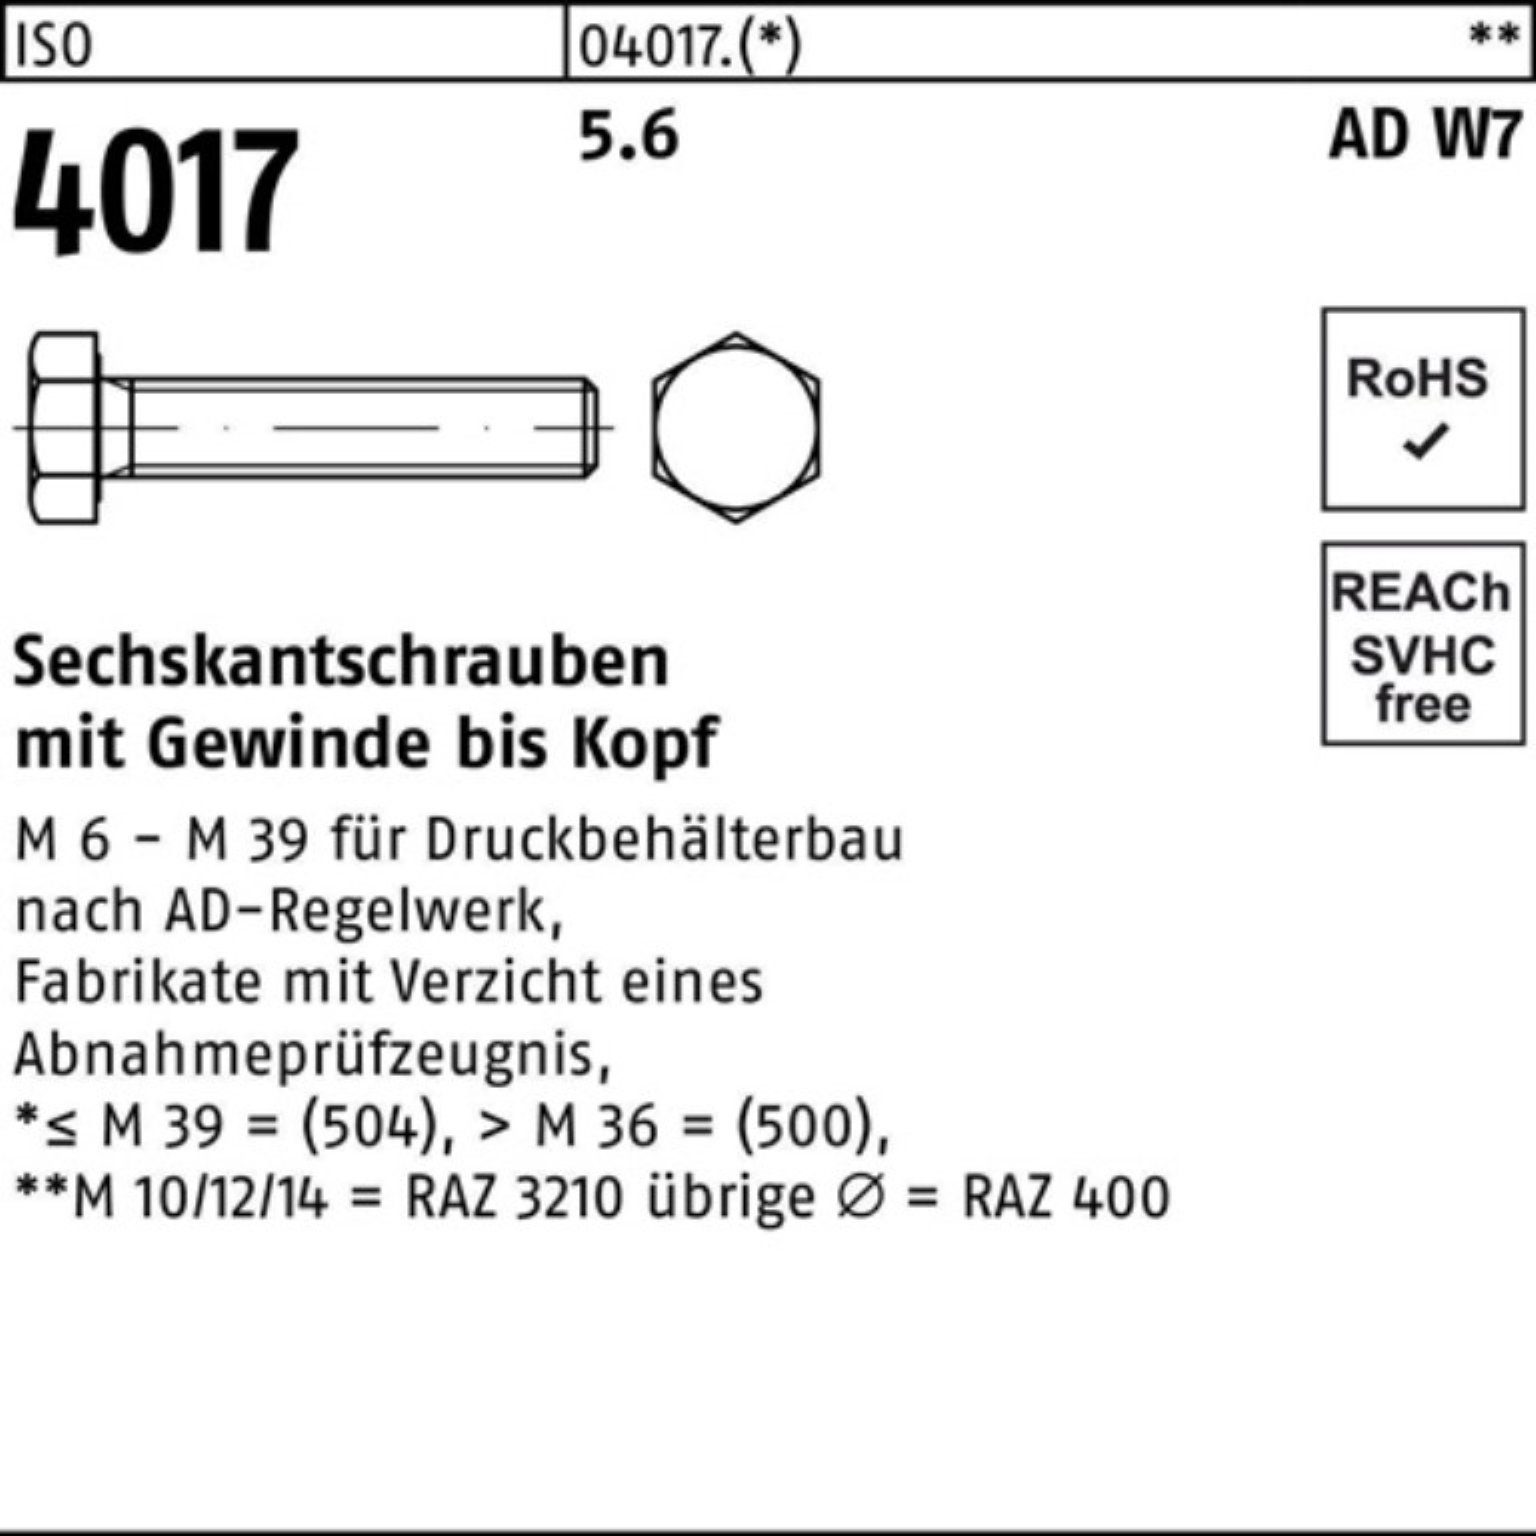 Bufab Sechskantschraube 200er ISO 5.6 Pack Stück 200 4017 VG W7 AD Sechskantschraube I M6x 50